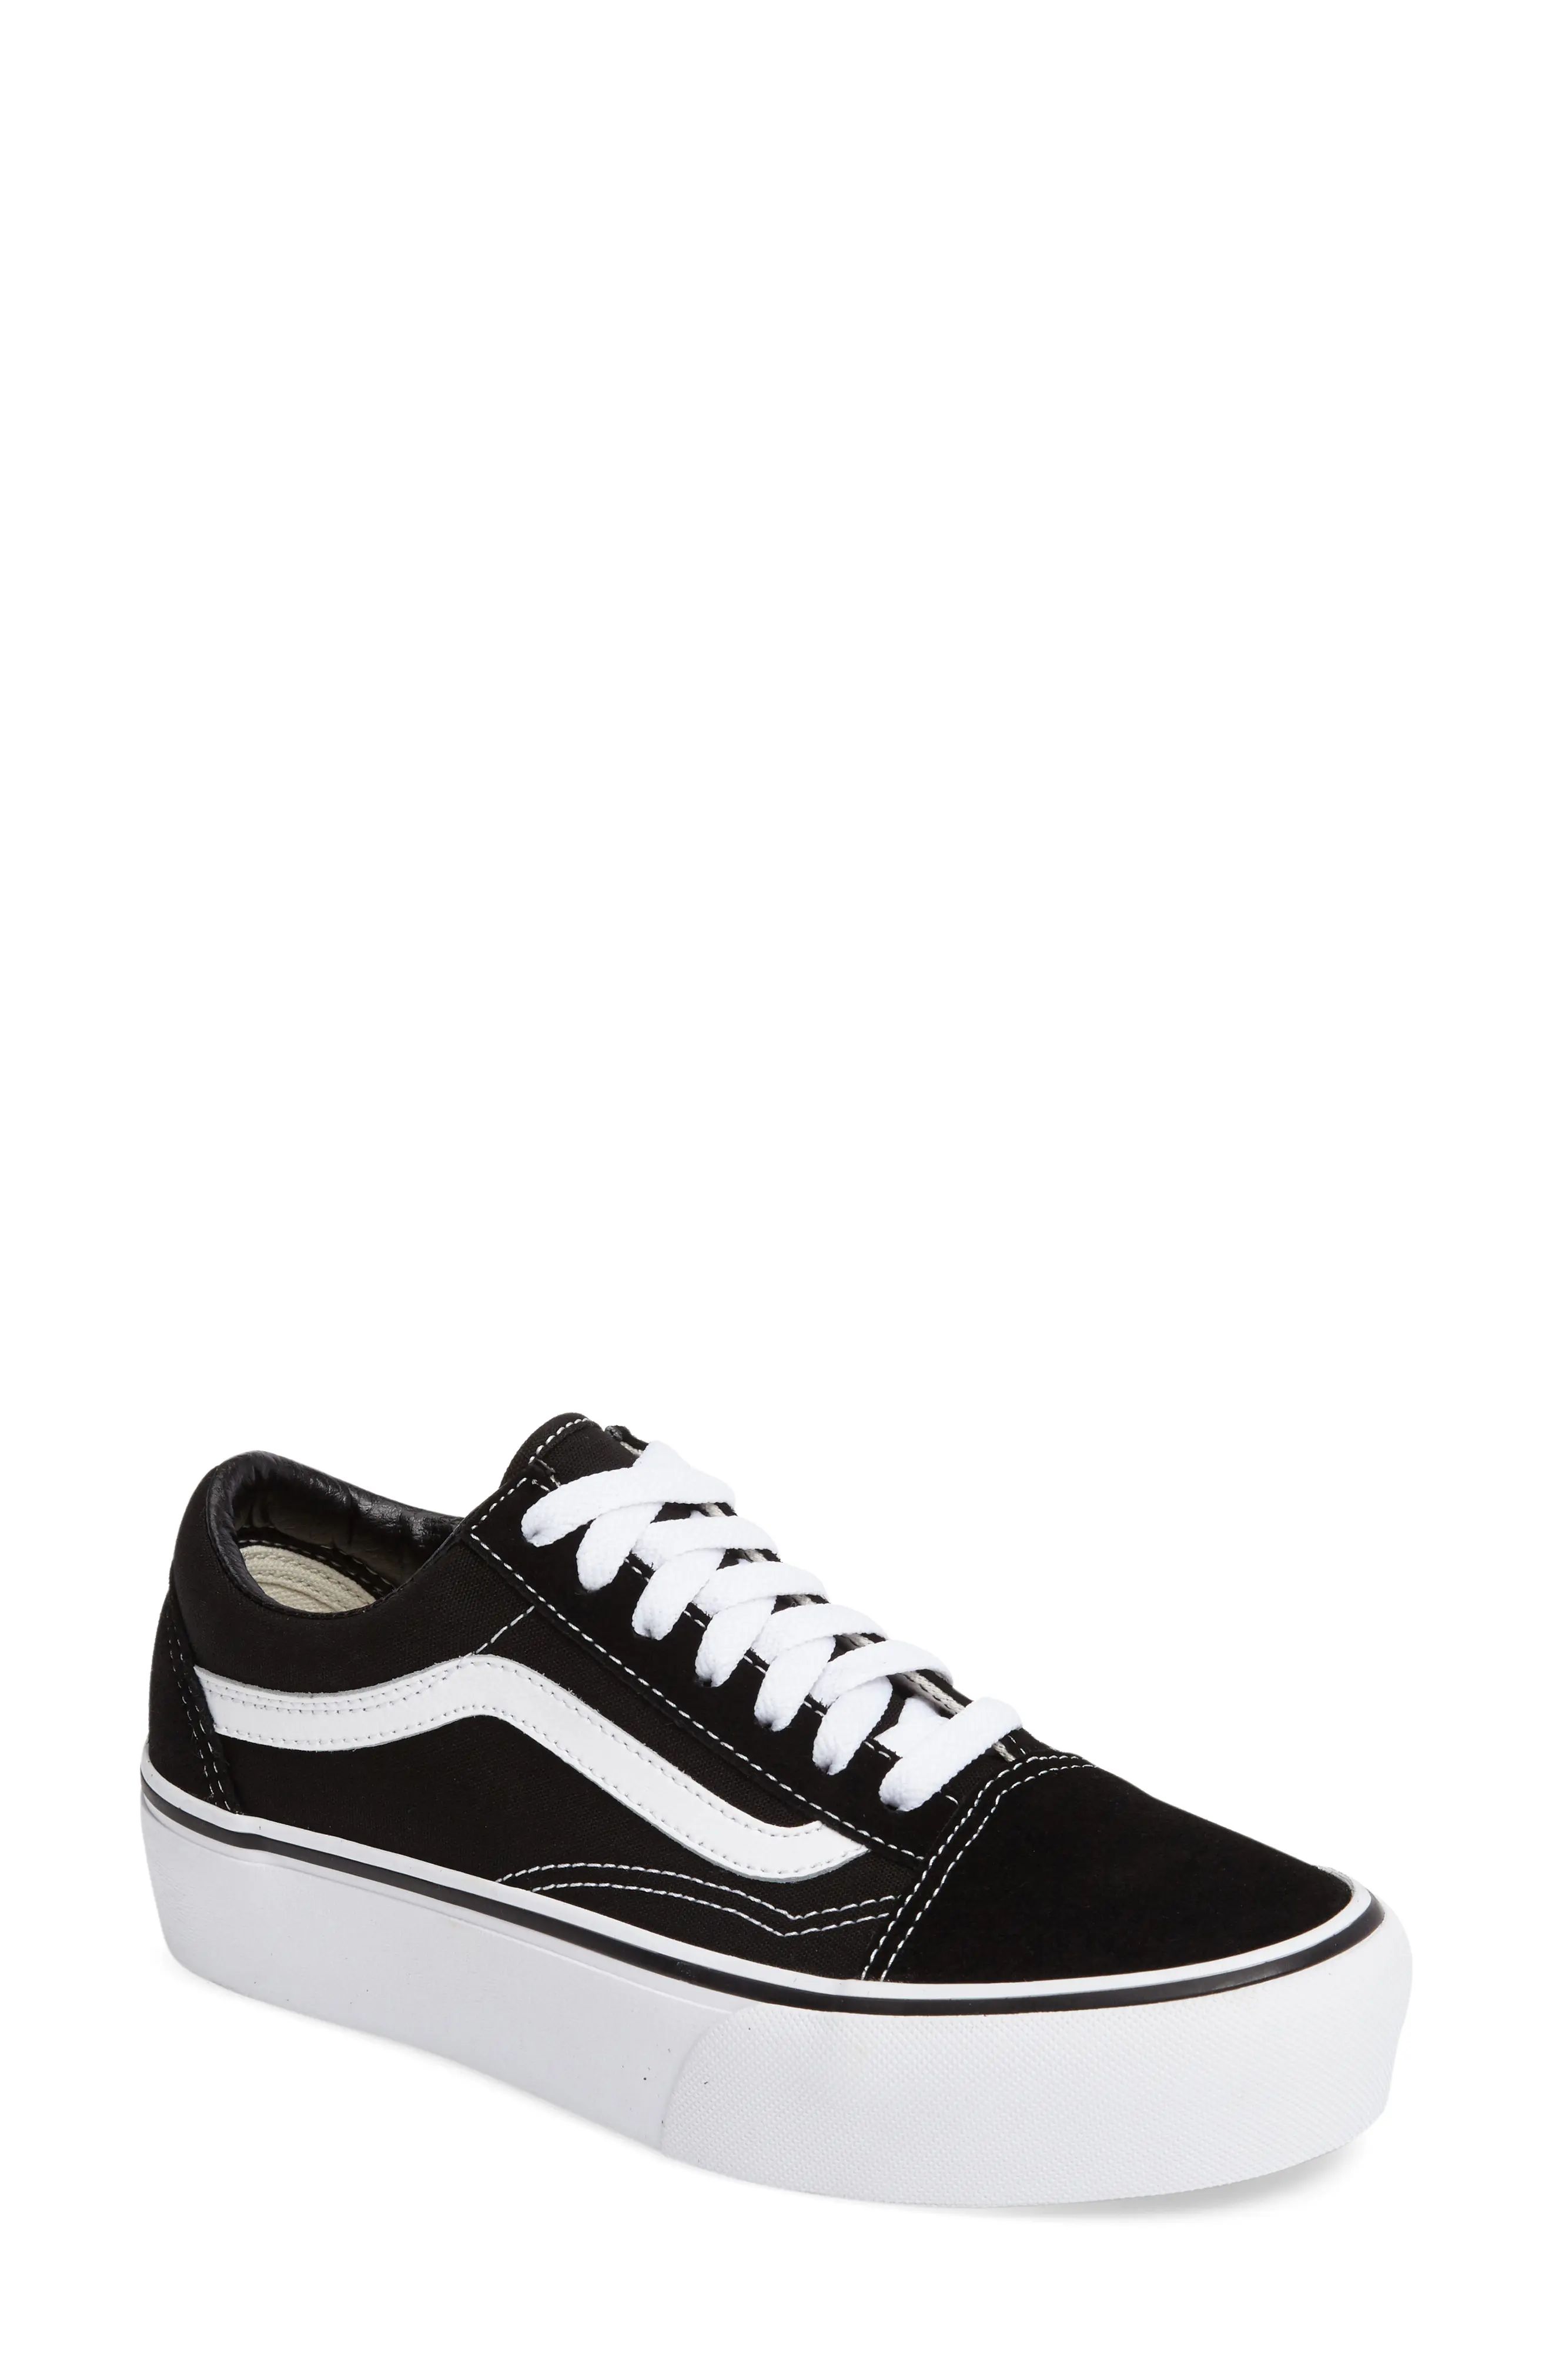 Women's Vans Old Skool Platform Sneaker, Size 5 M - Black | Nordstrom